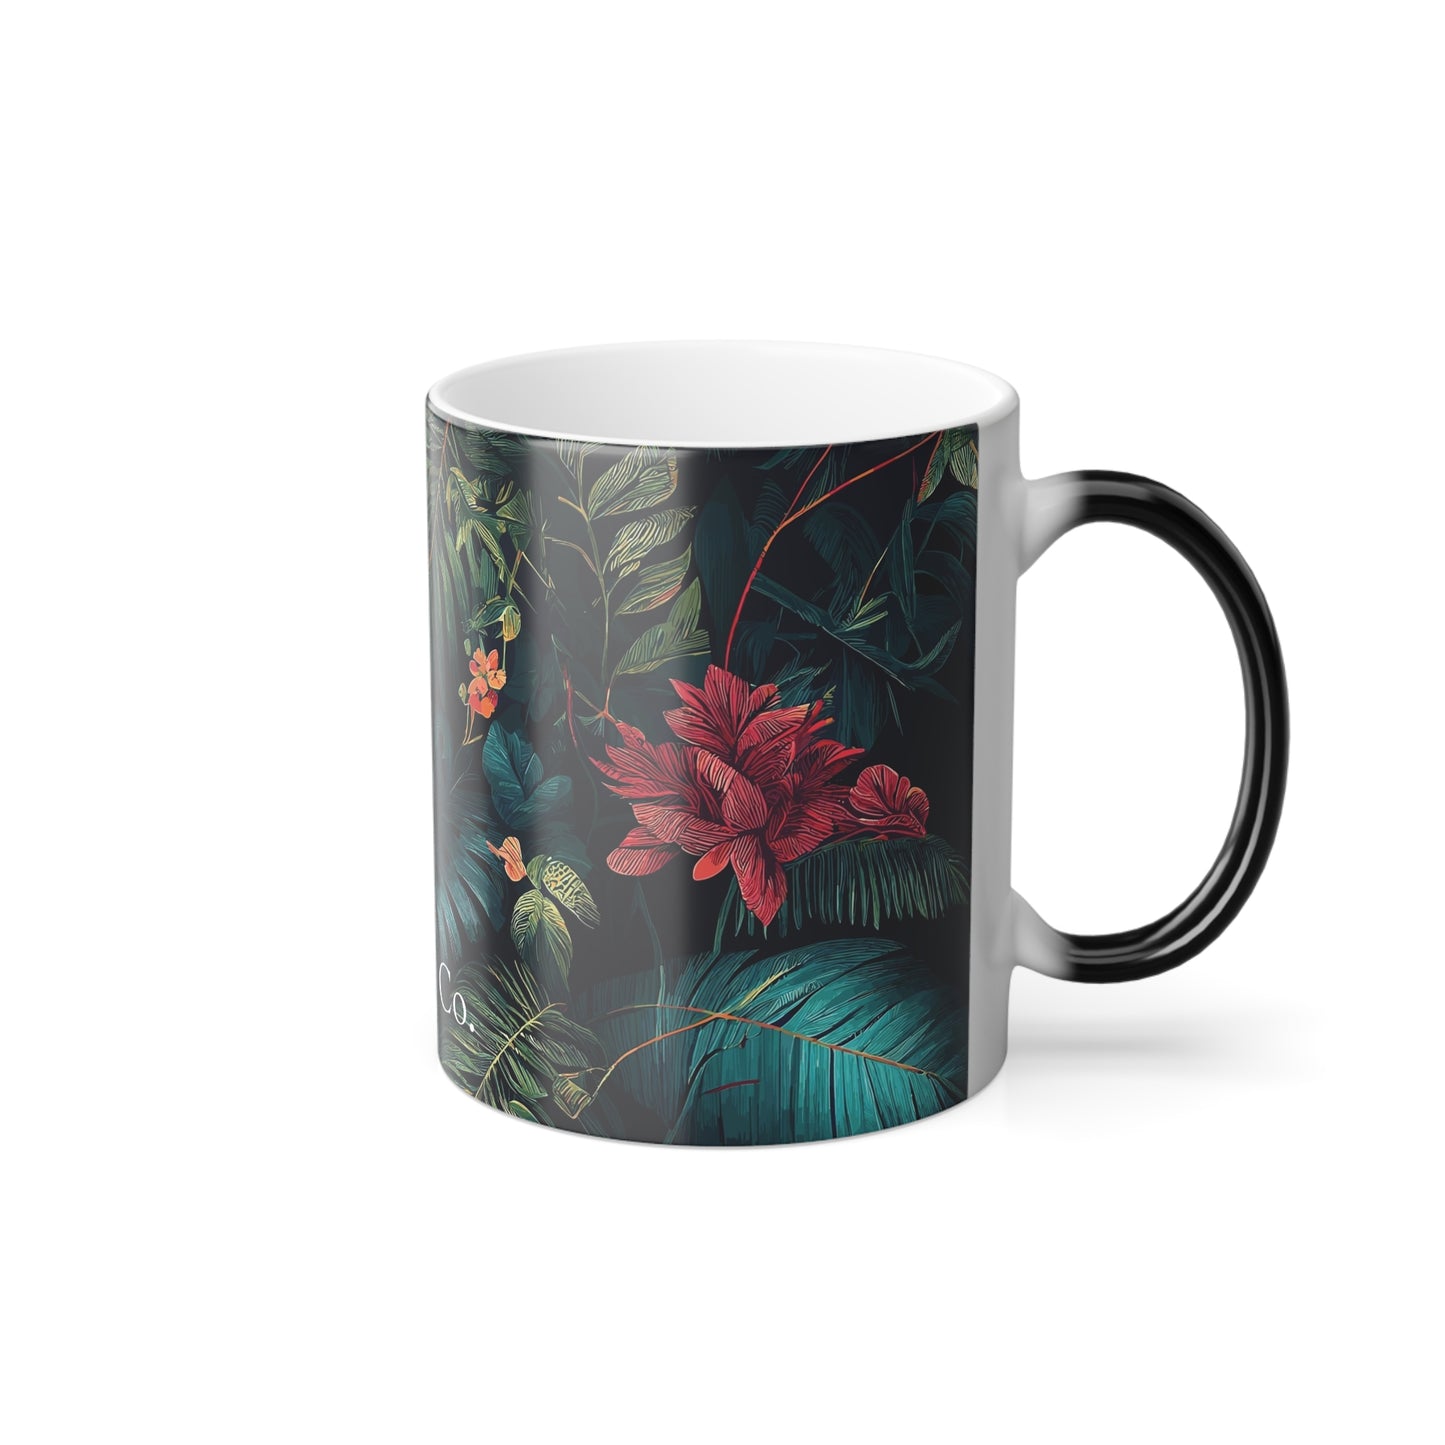 Rainforest - Morphing Mug, 11oz